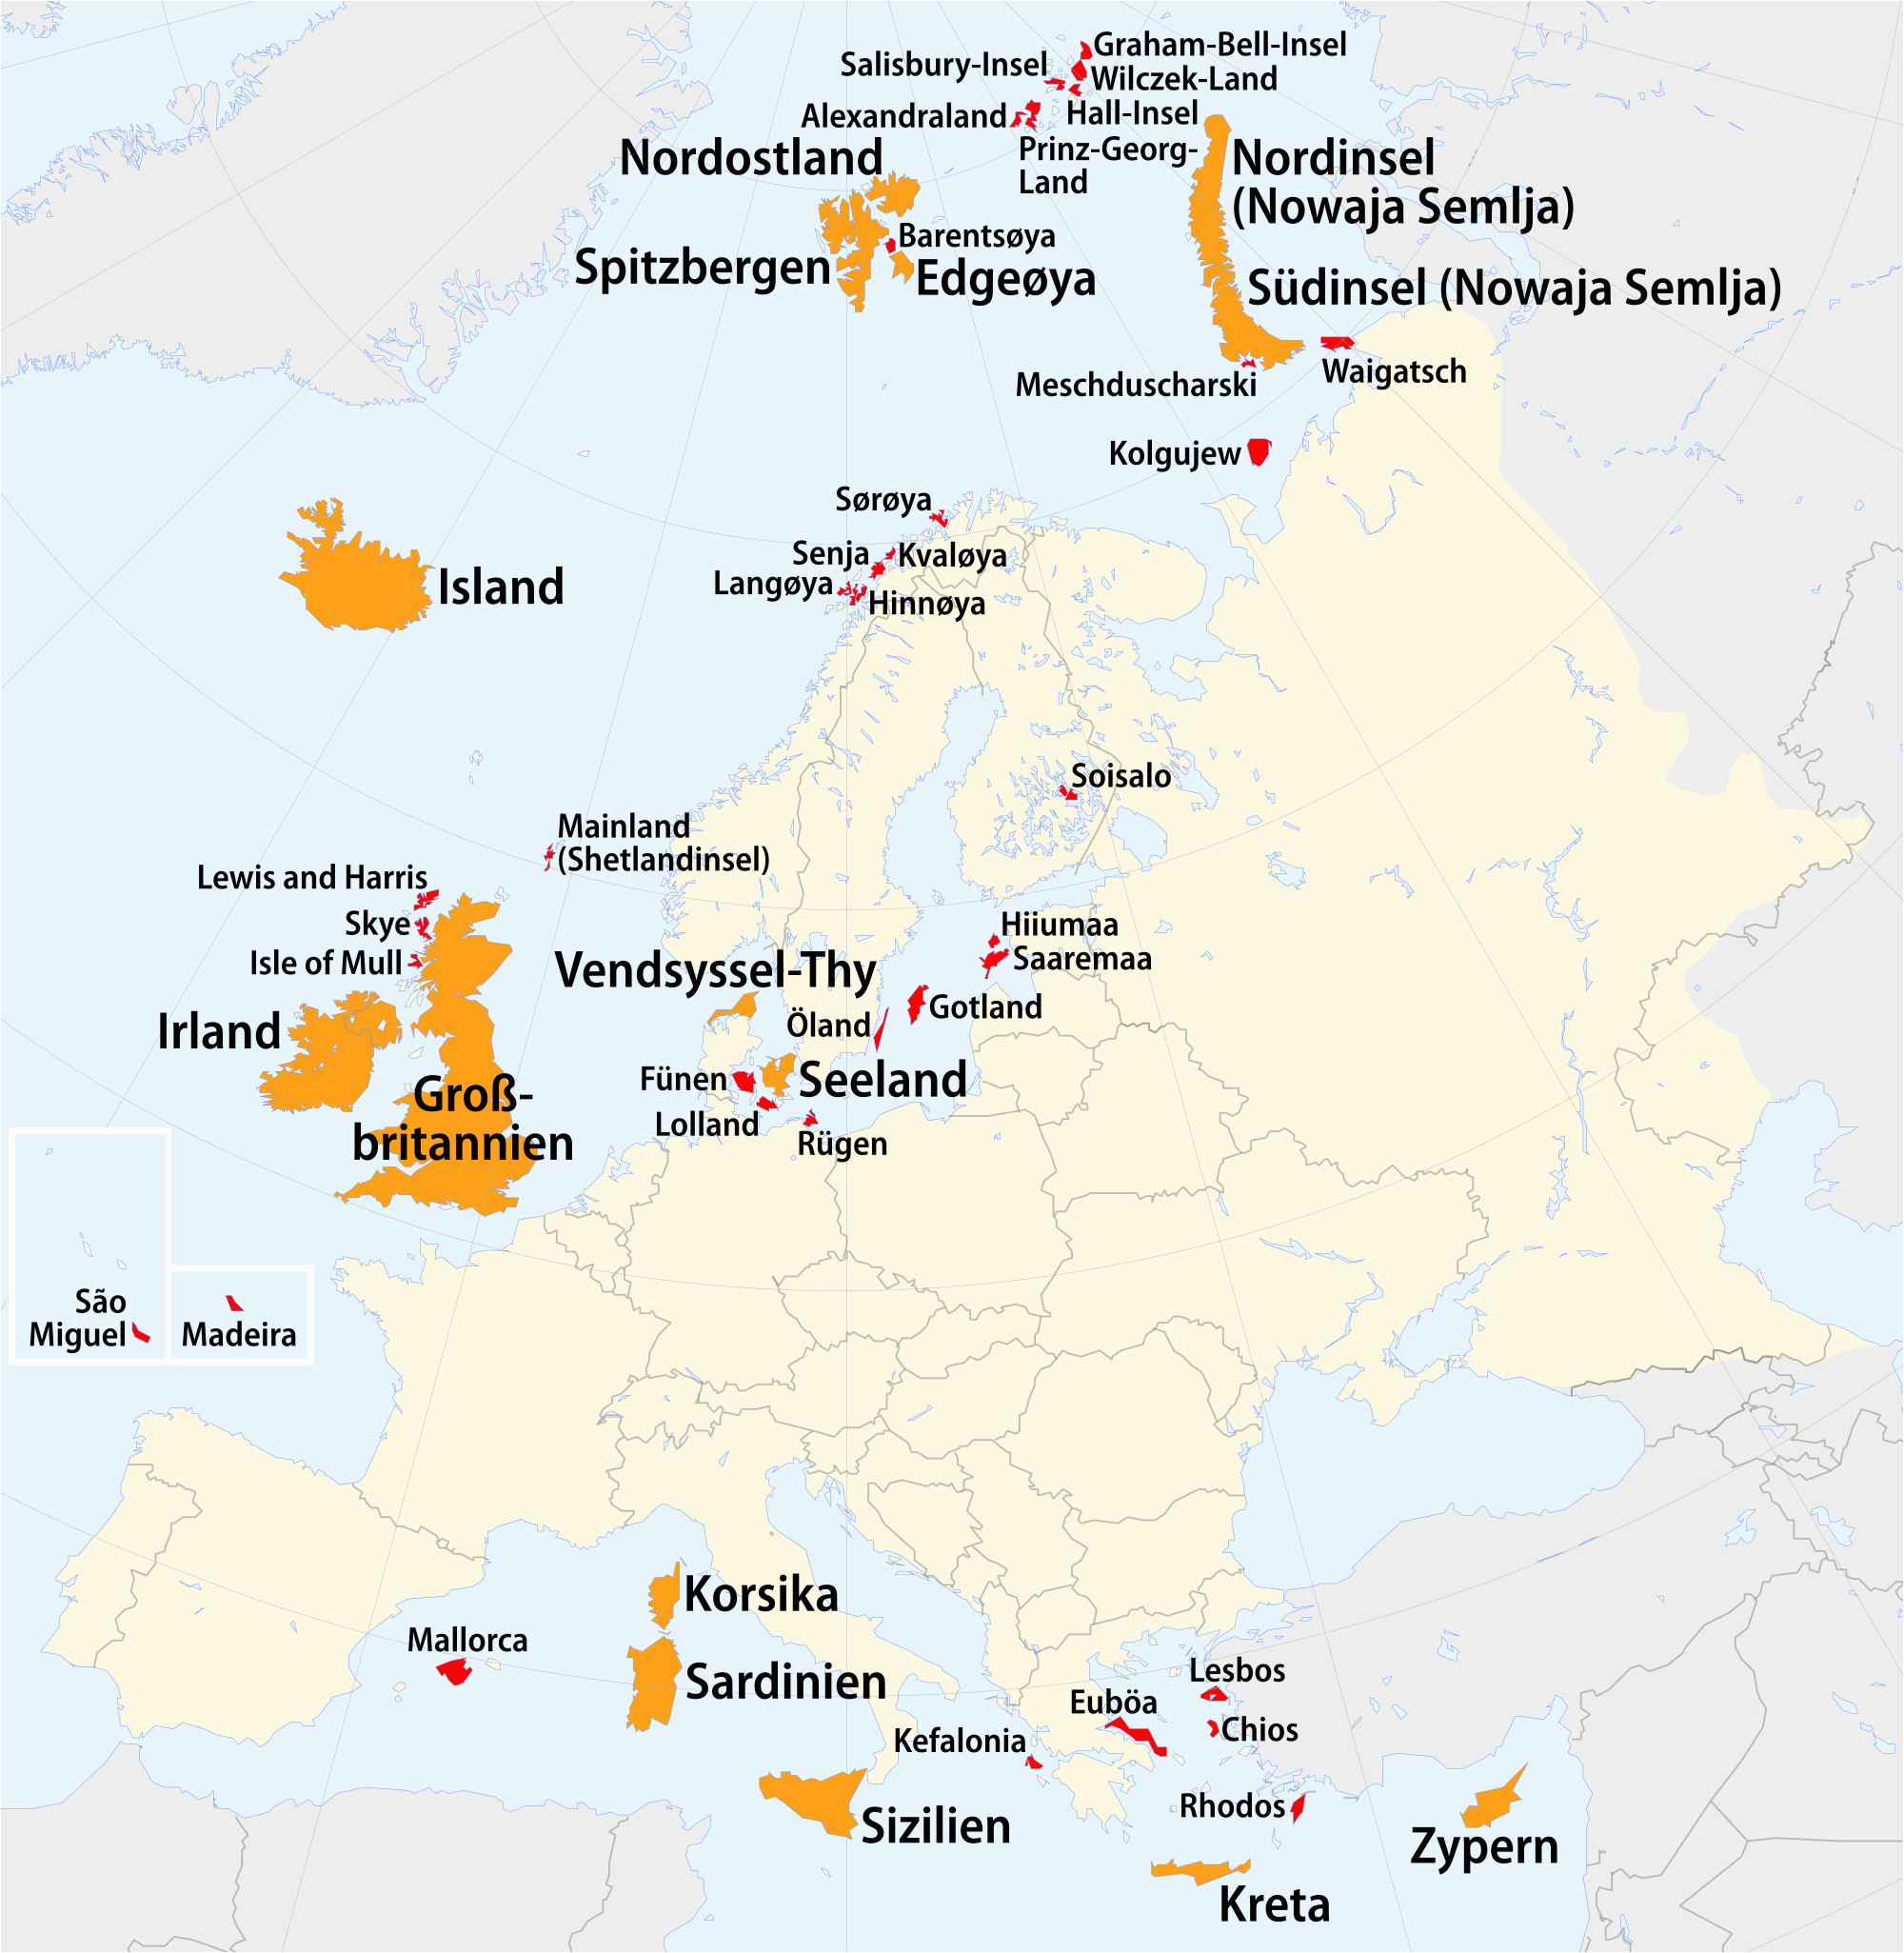 liste europaischer inseln nach flache wikipedia